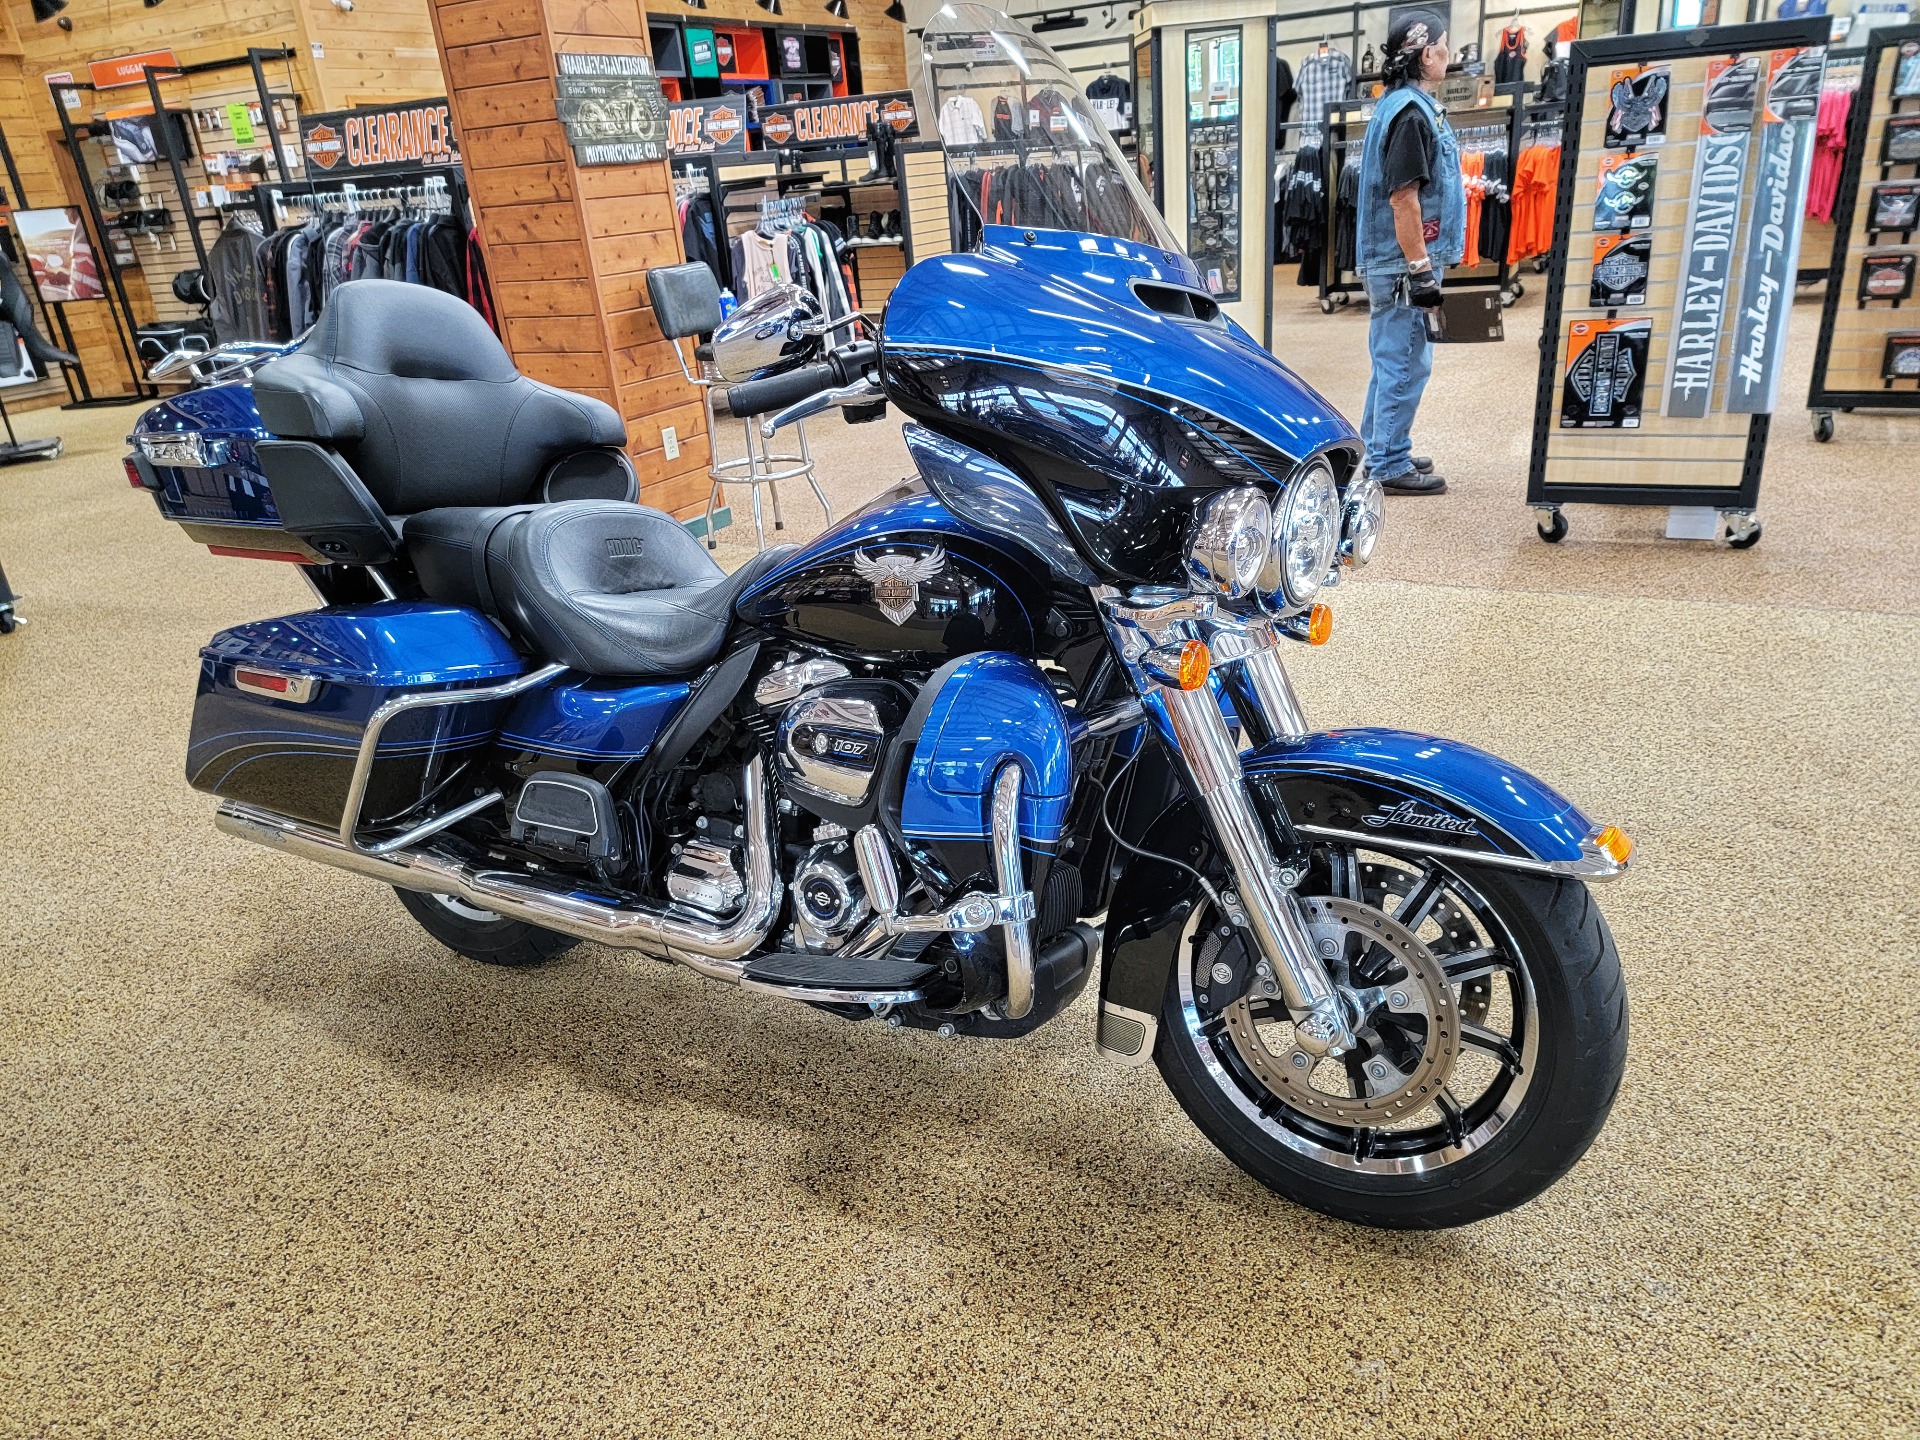 Used 2018 Harley Davidson 115th Anniversary Ultra Limited 115th Anniversary Legend Blue Vivid Black Motorcycles In Sauk Rapids Mn B0008